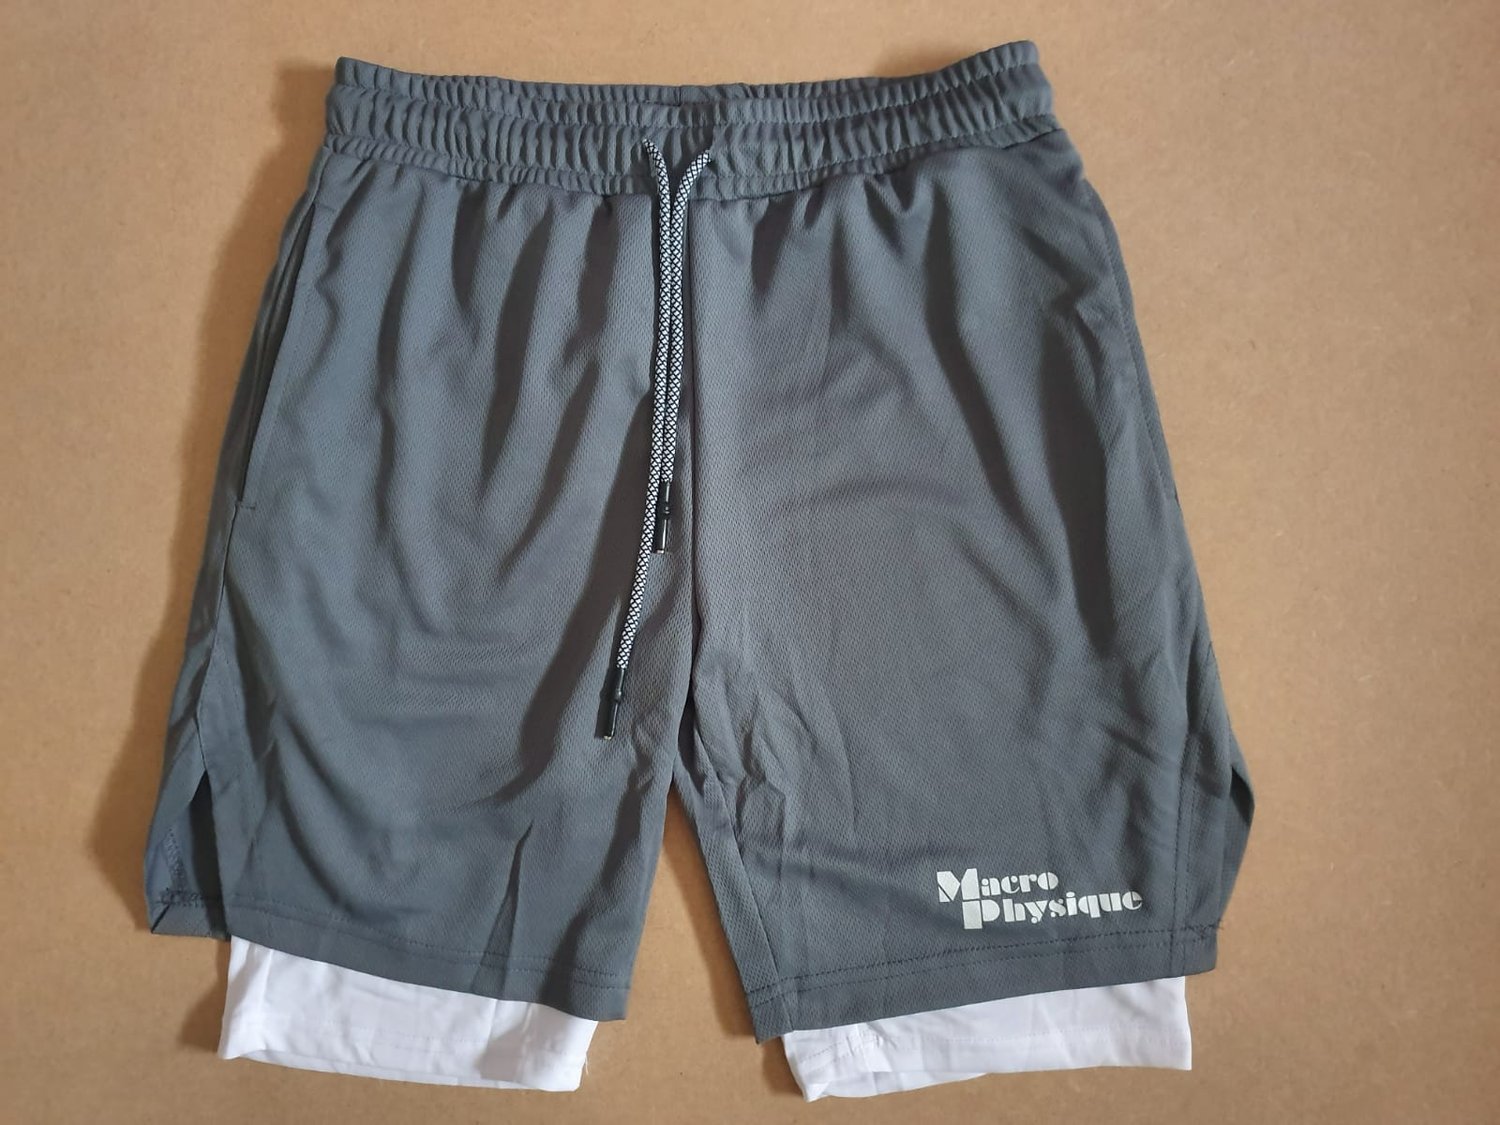 Macro Physique 2 in 1 pocket shorts | Macro Physique